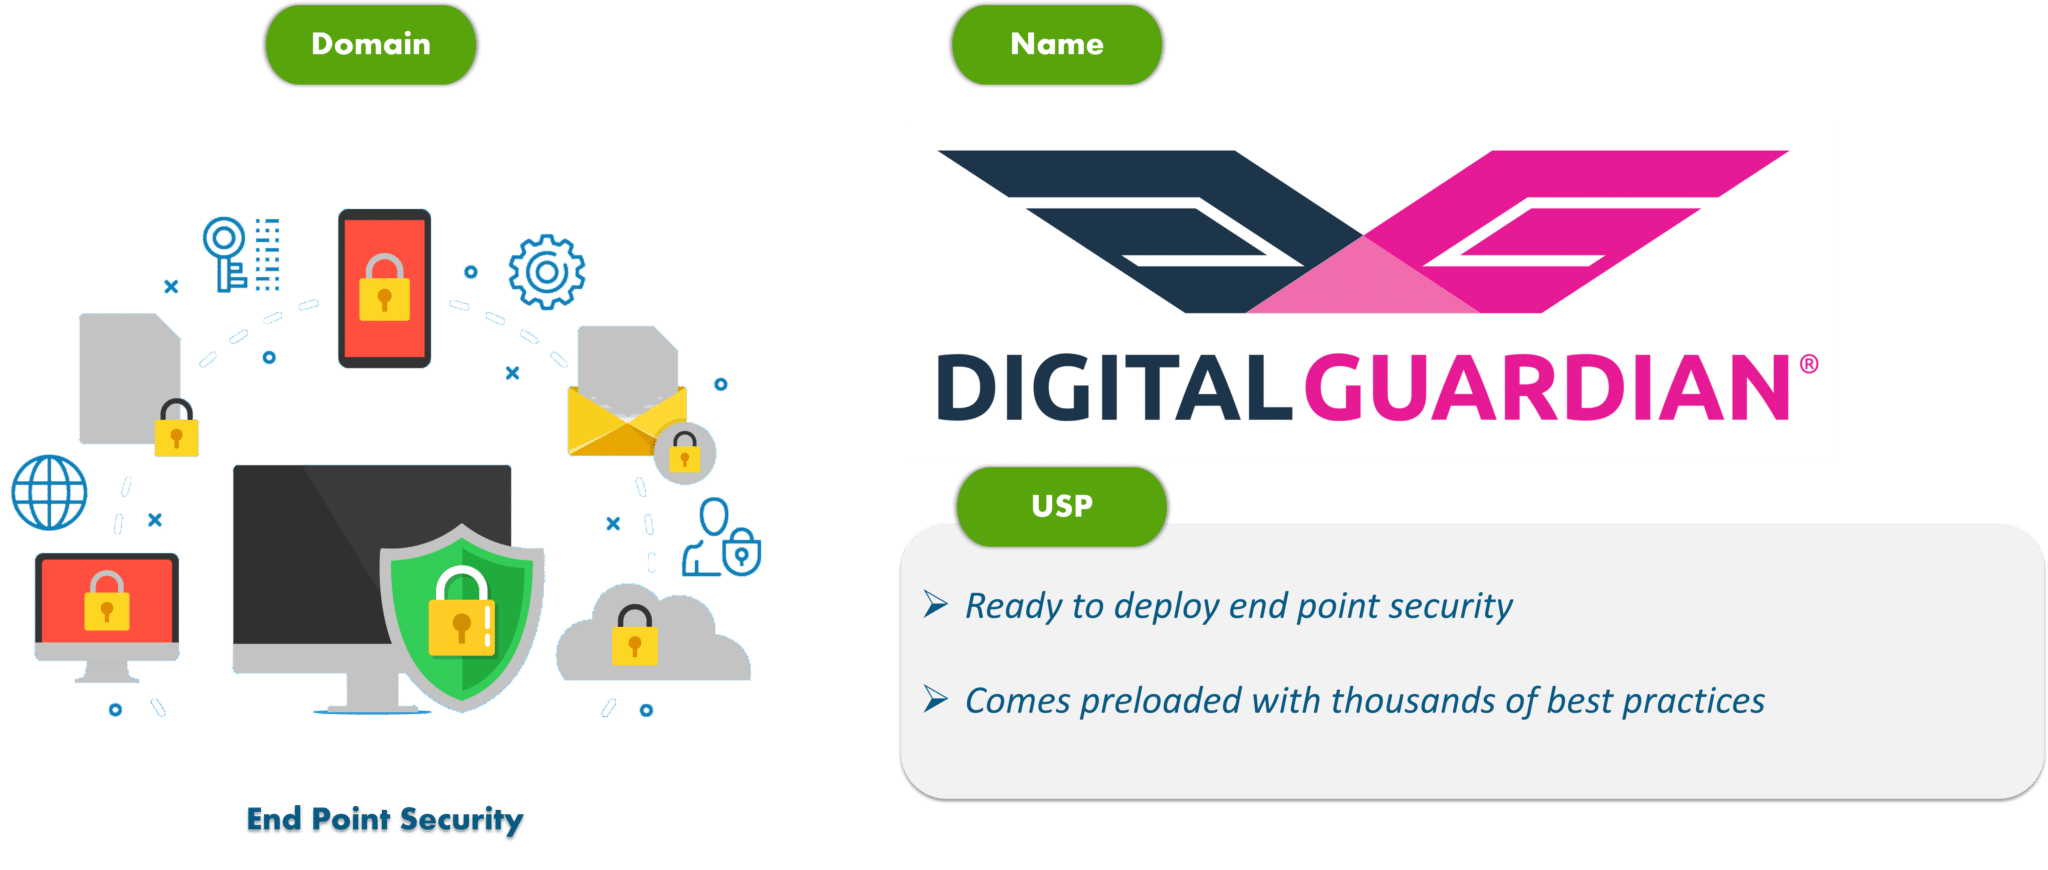 Digital Guardian - Cybersecurity Tools - Edureka